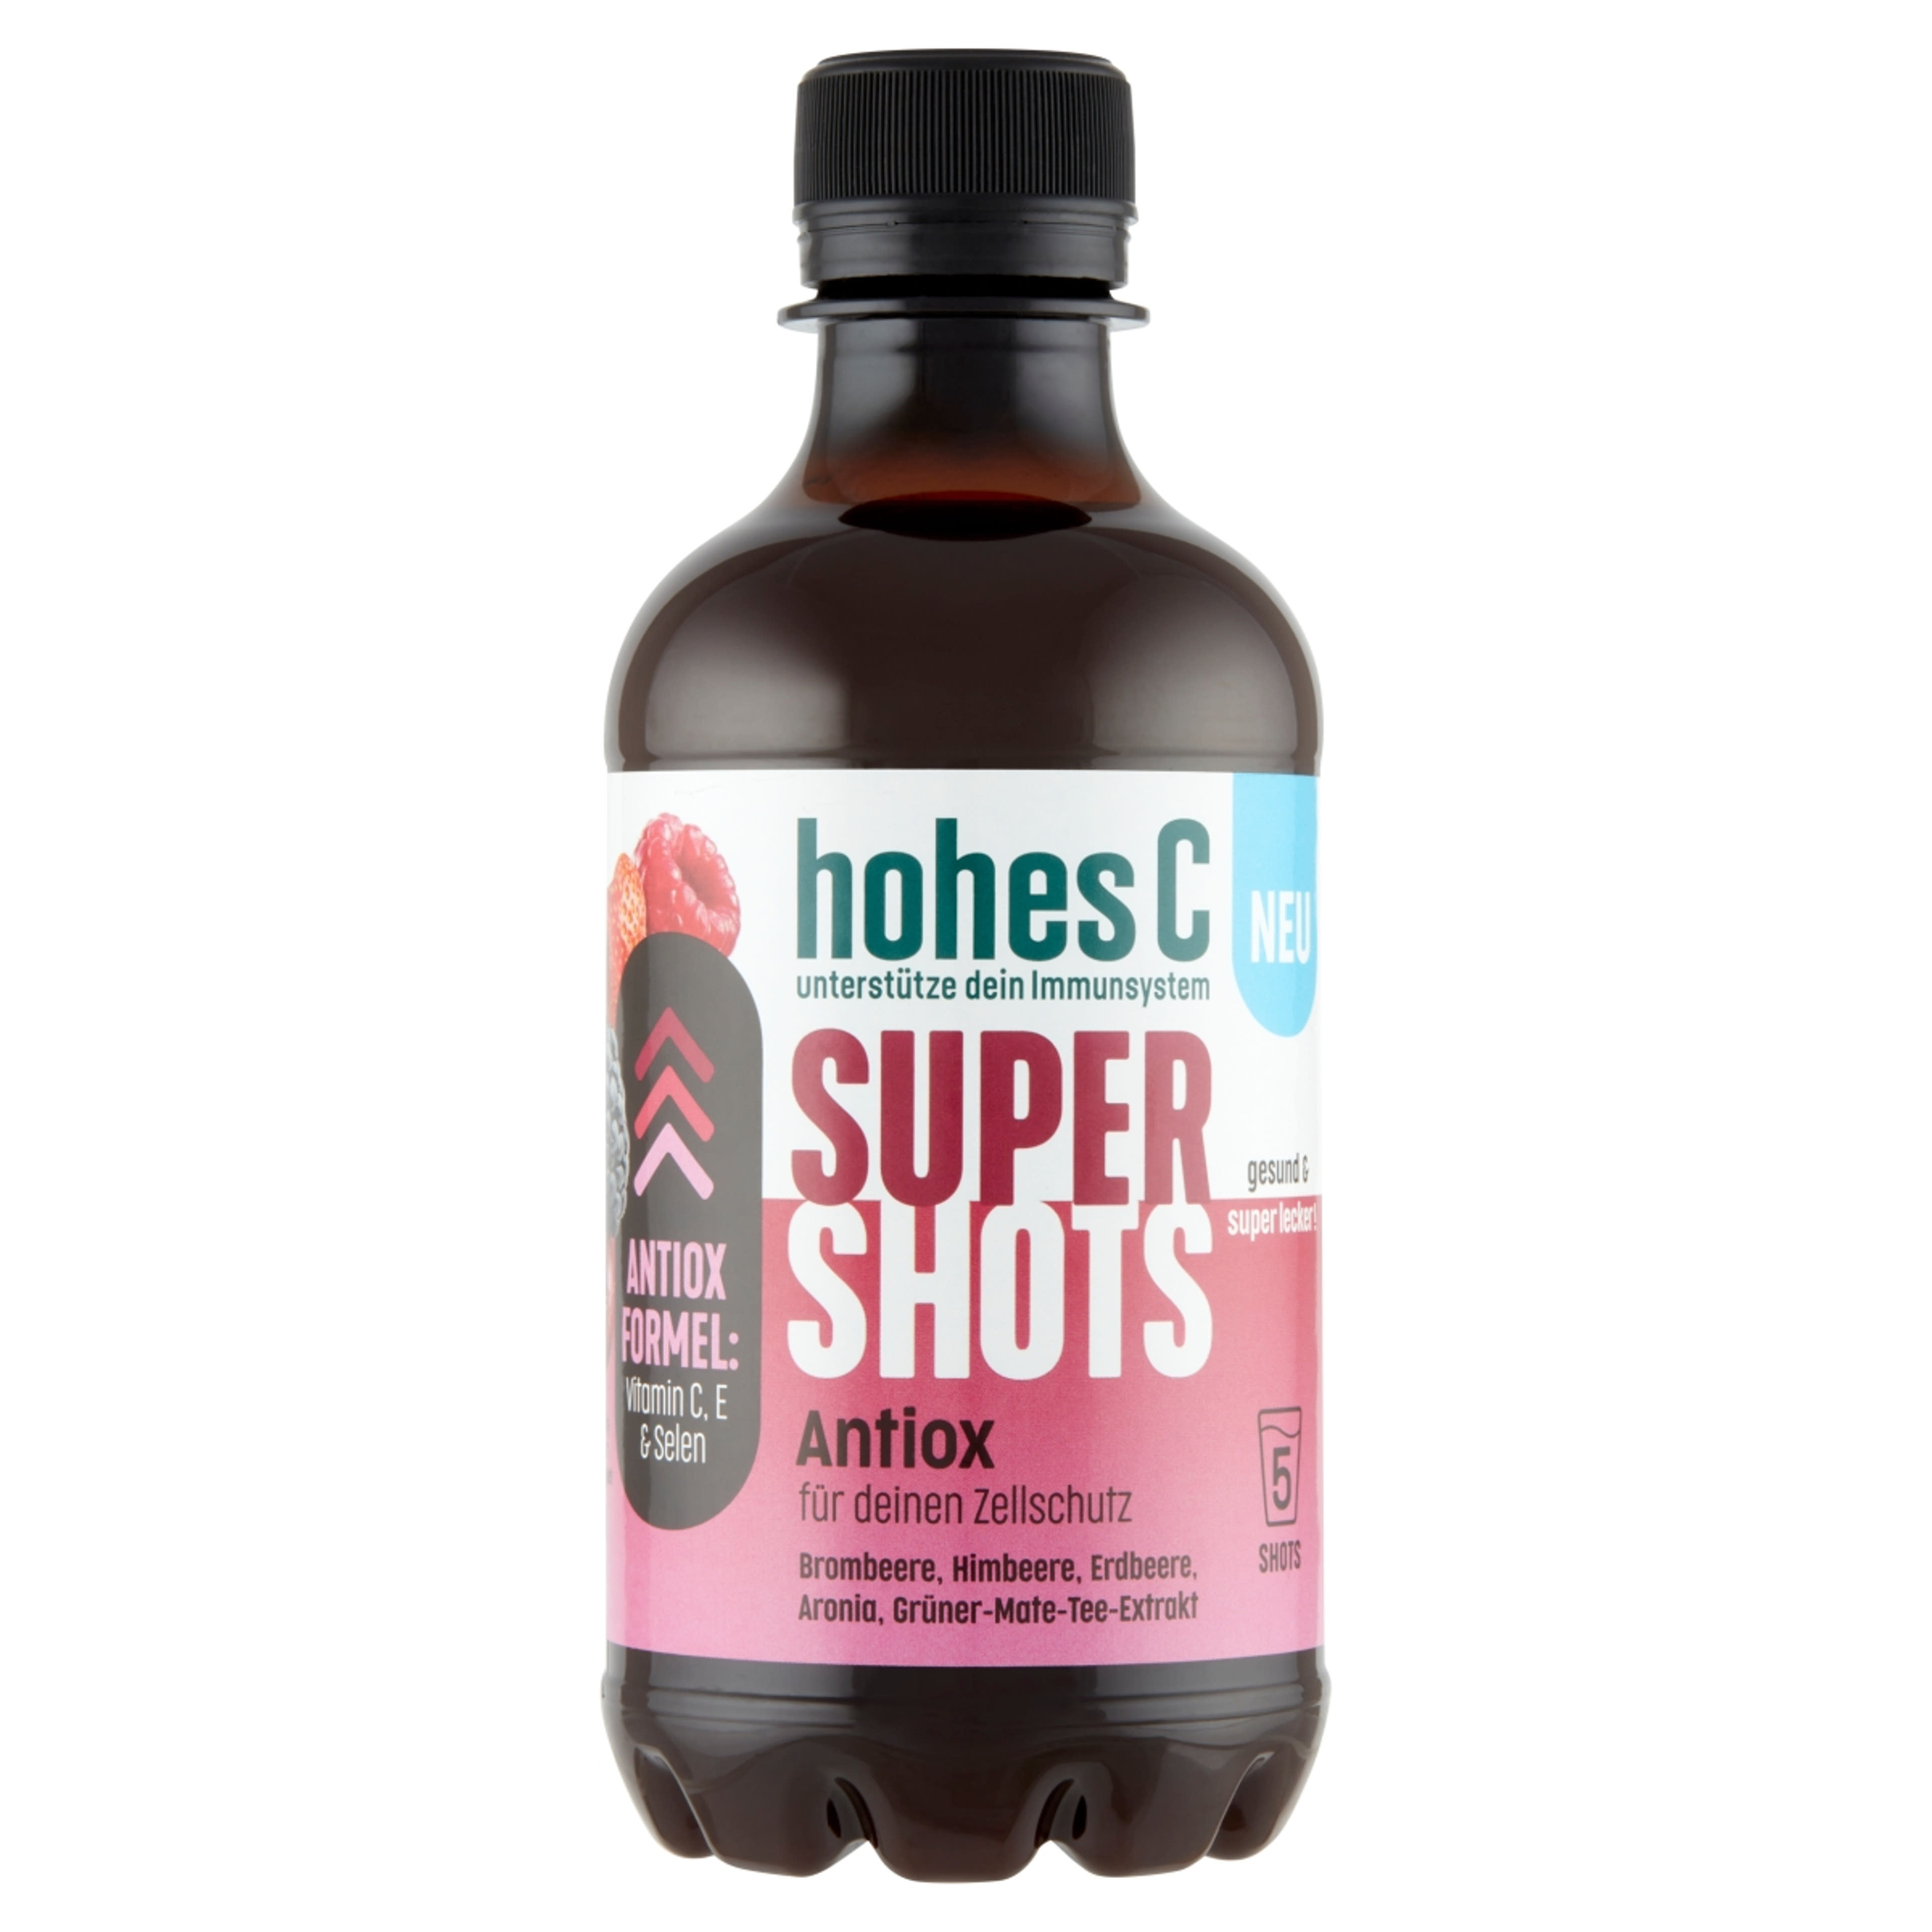 Hohes C Supershots Antiox 100%  - 330 ML-1